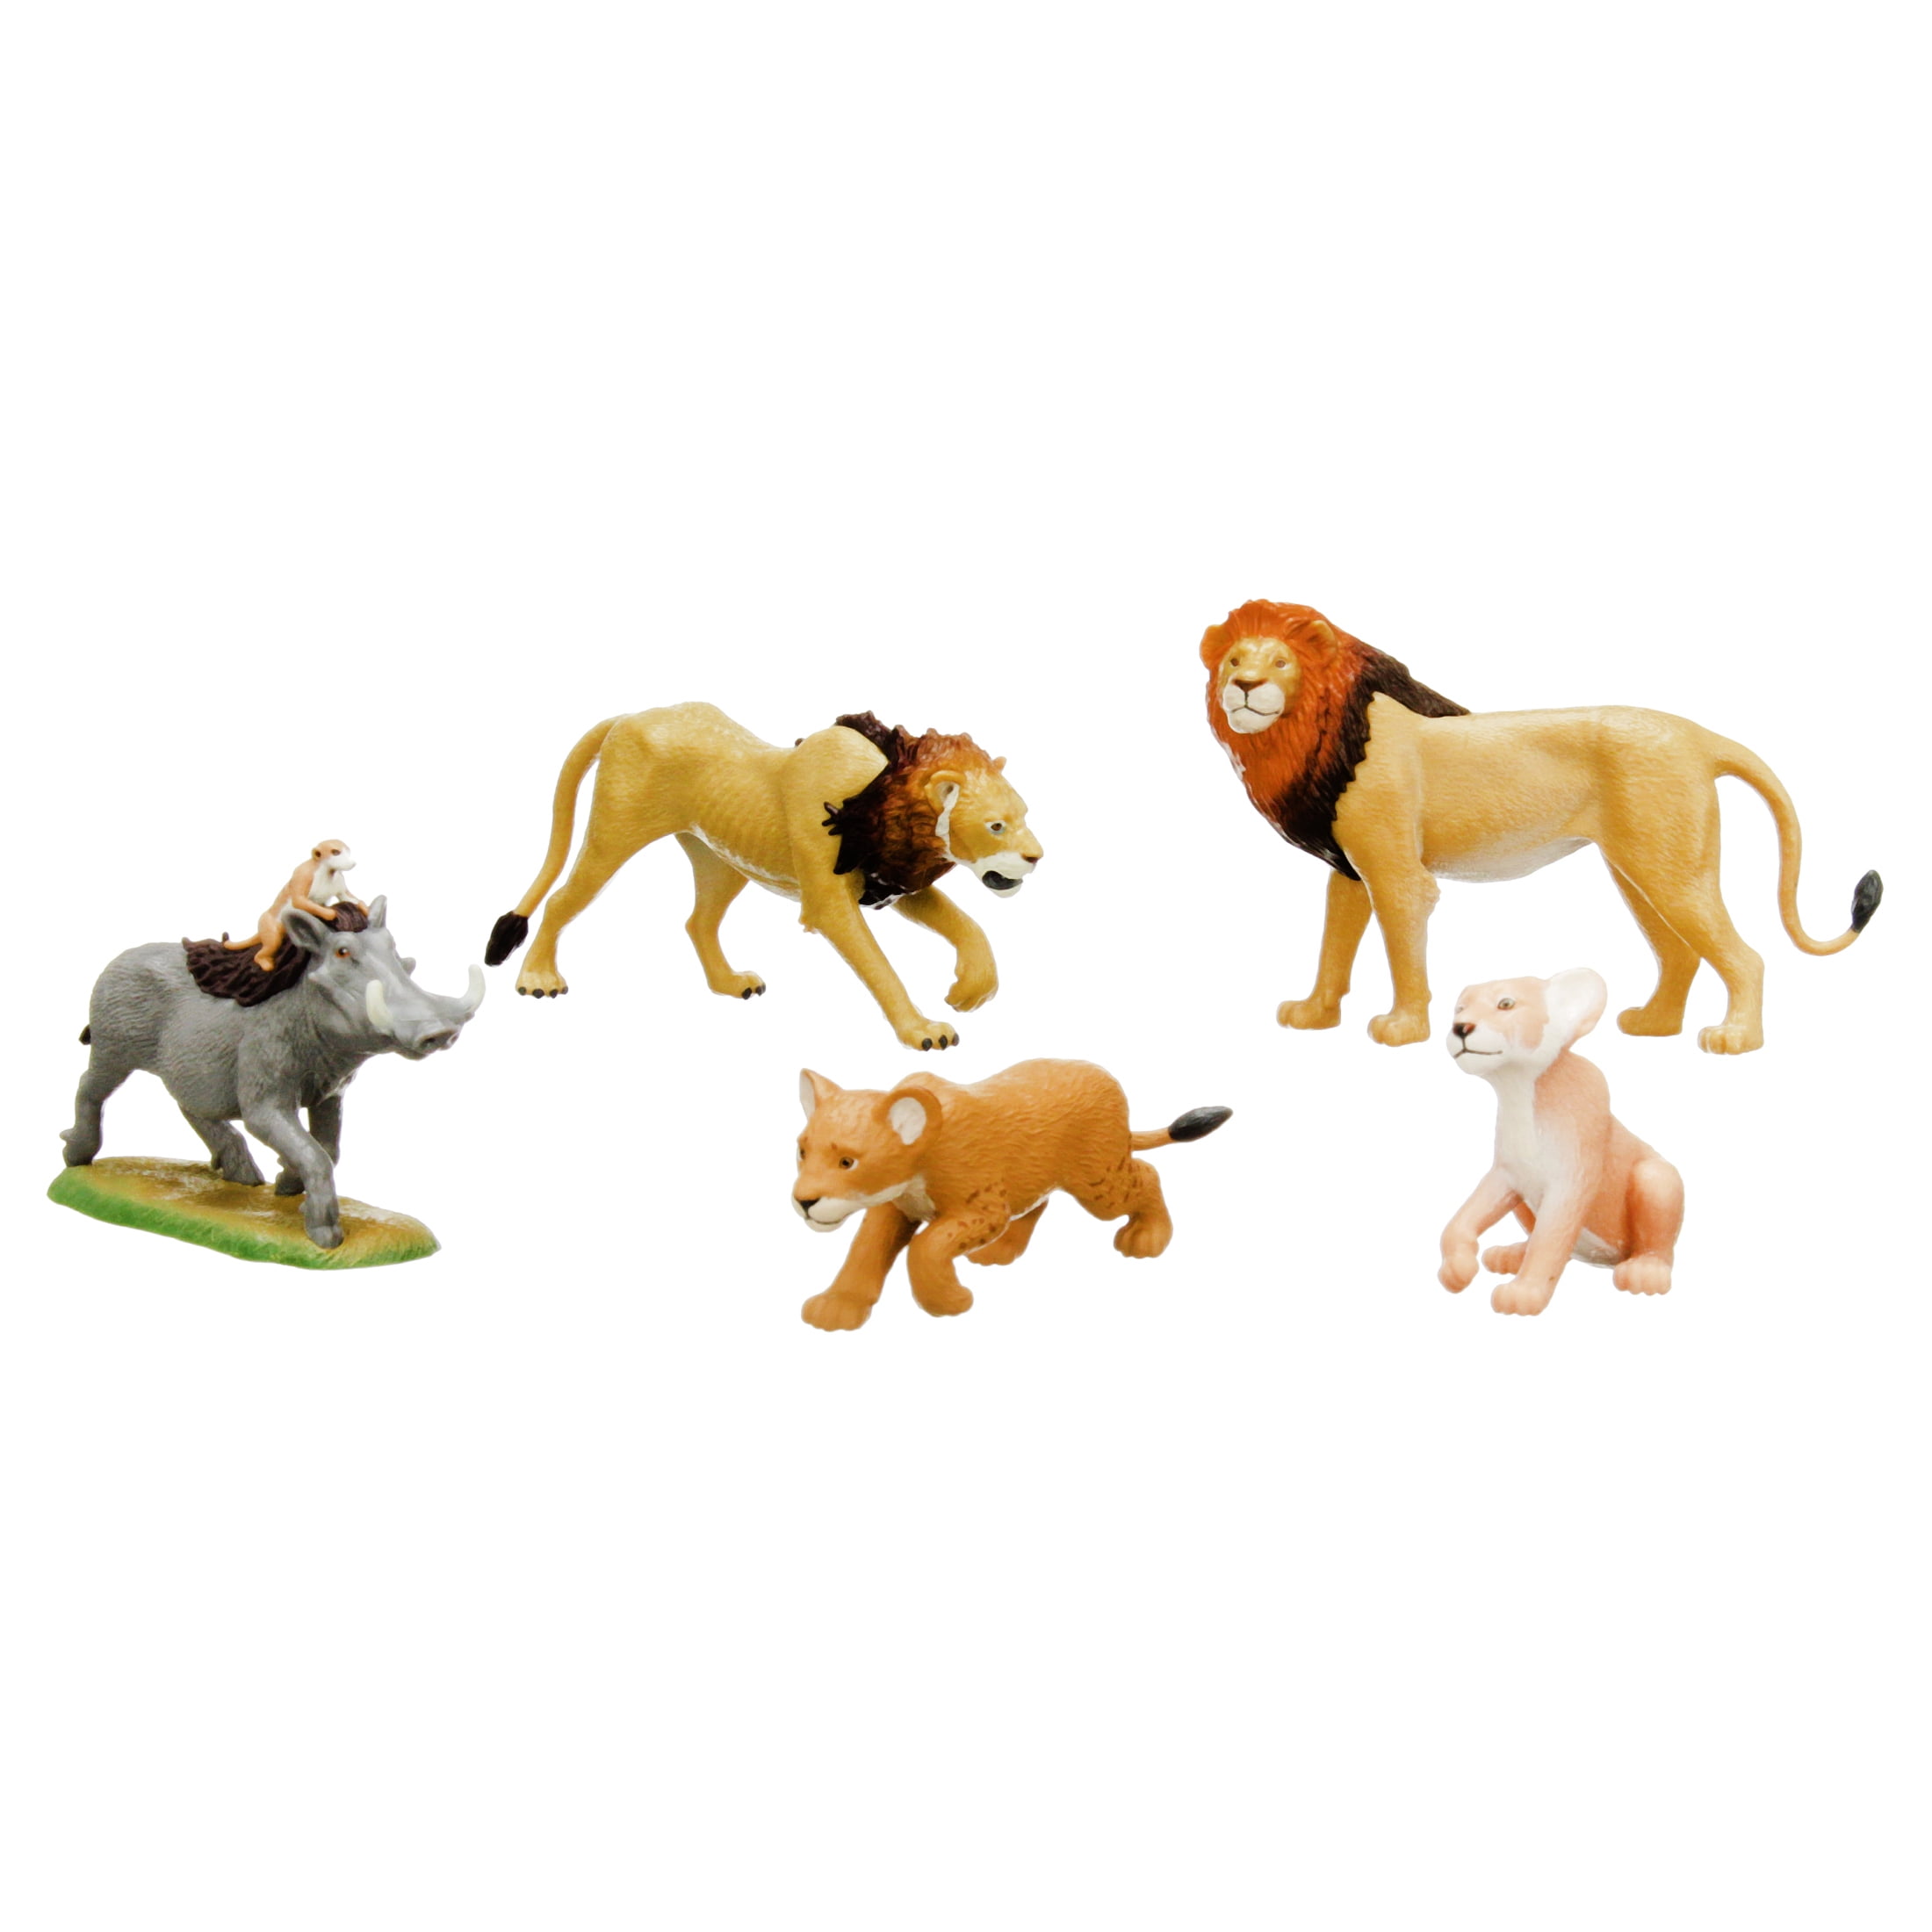 Disney The Lion King Collector Figure Set 5 Piece for sale online 